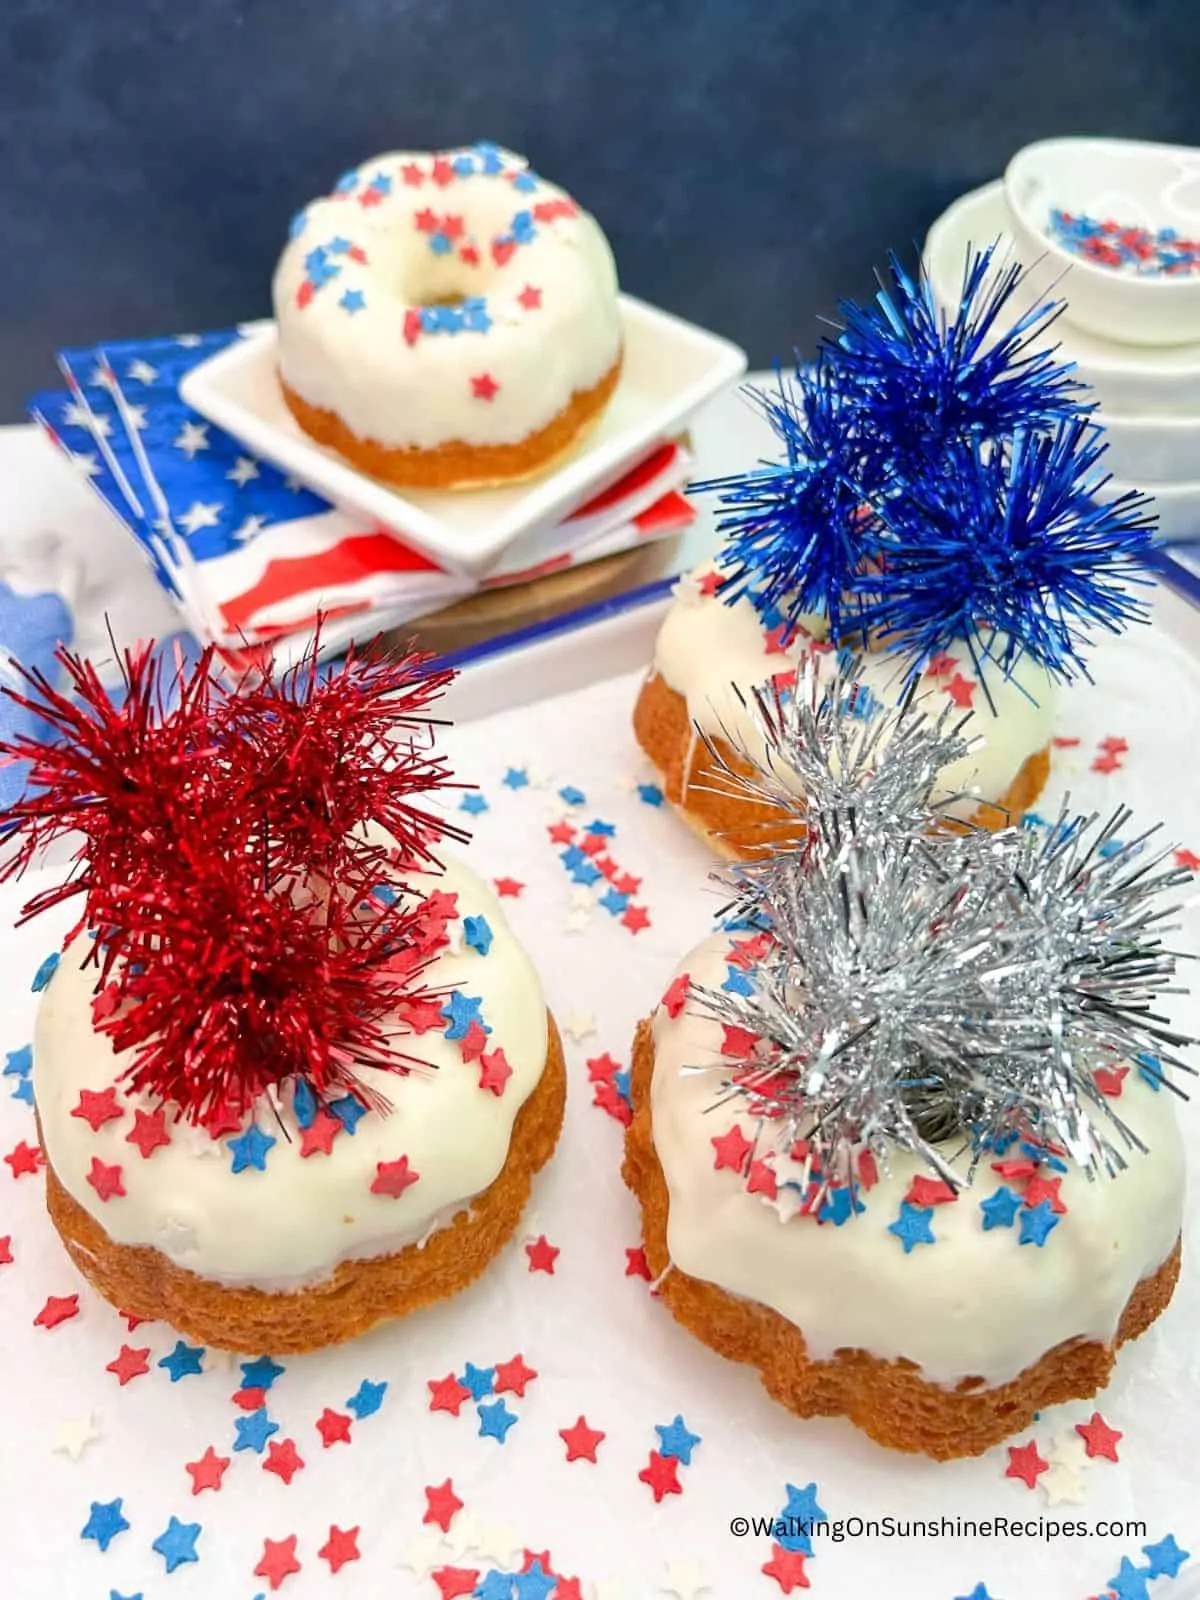 decorated patriotic bundt cakes on white platter.